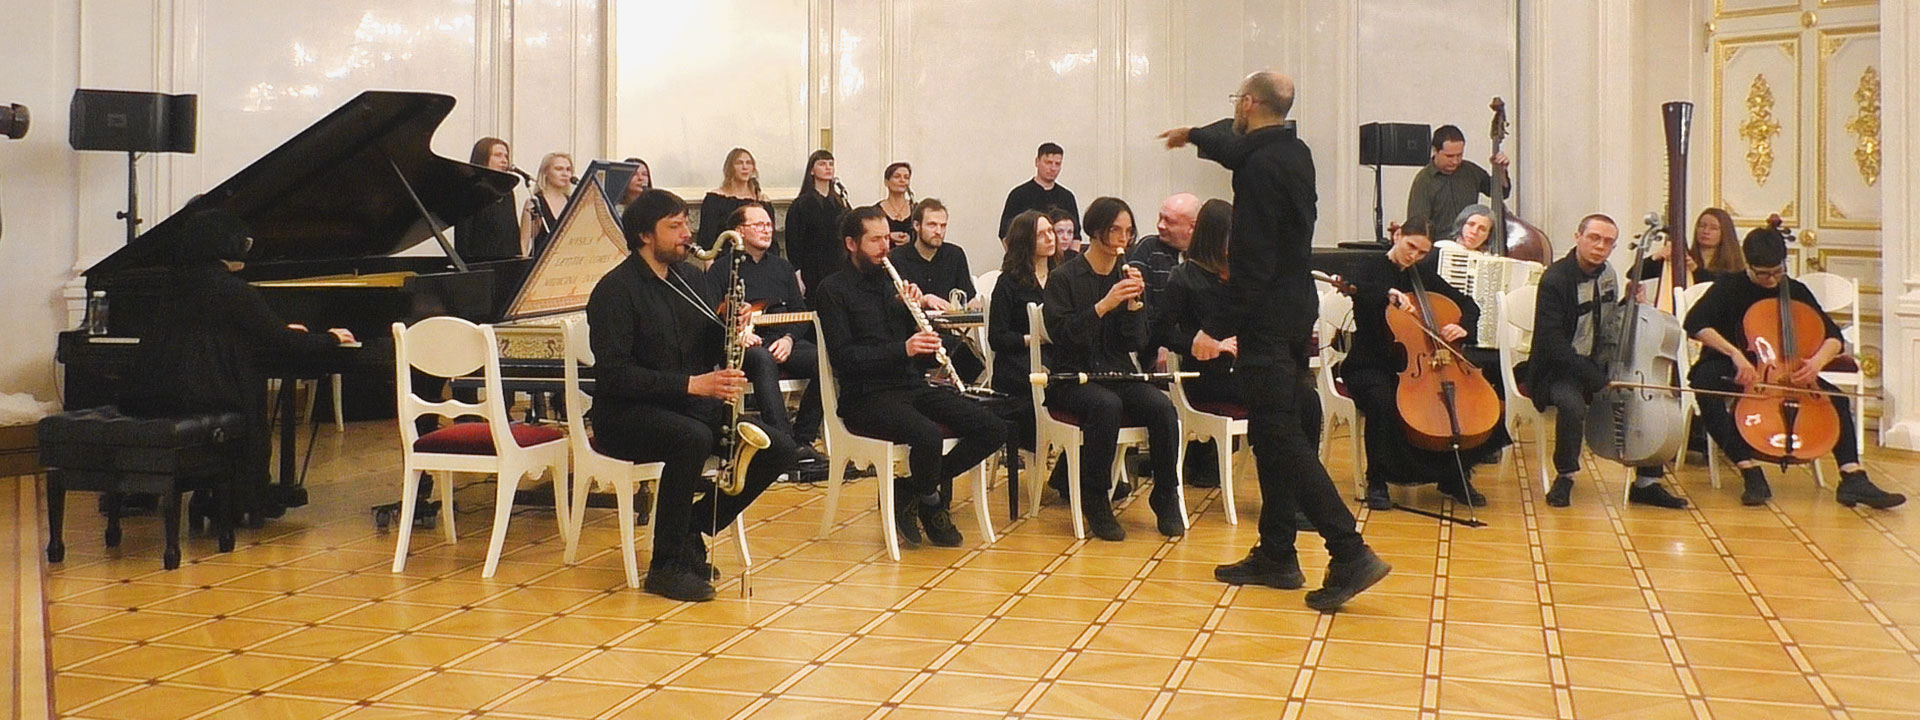 St.Petersburg Improvisers Orchestra: Сессия XCVI (Шереметевская)